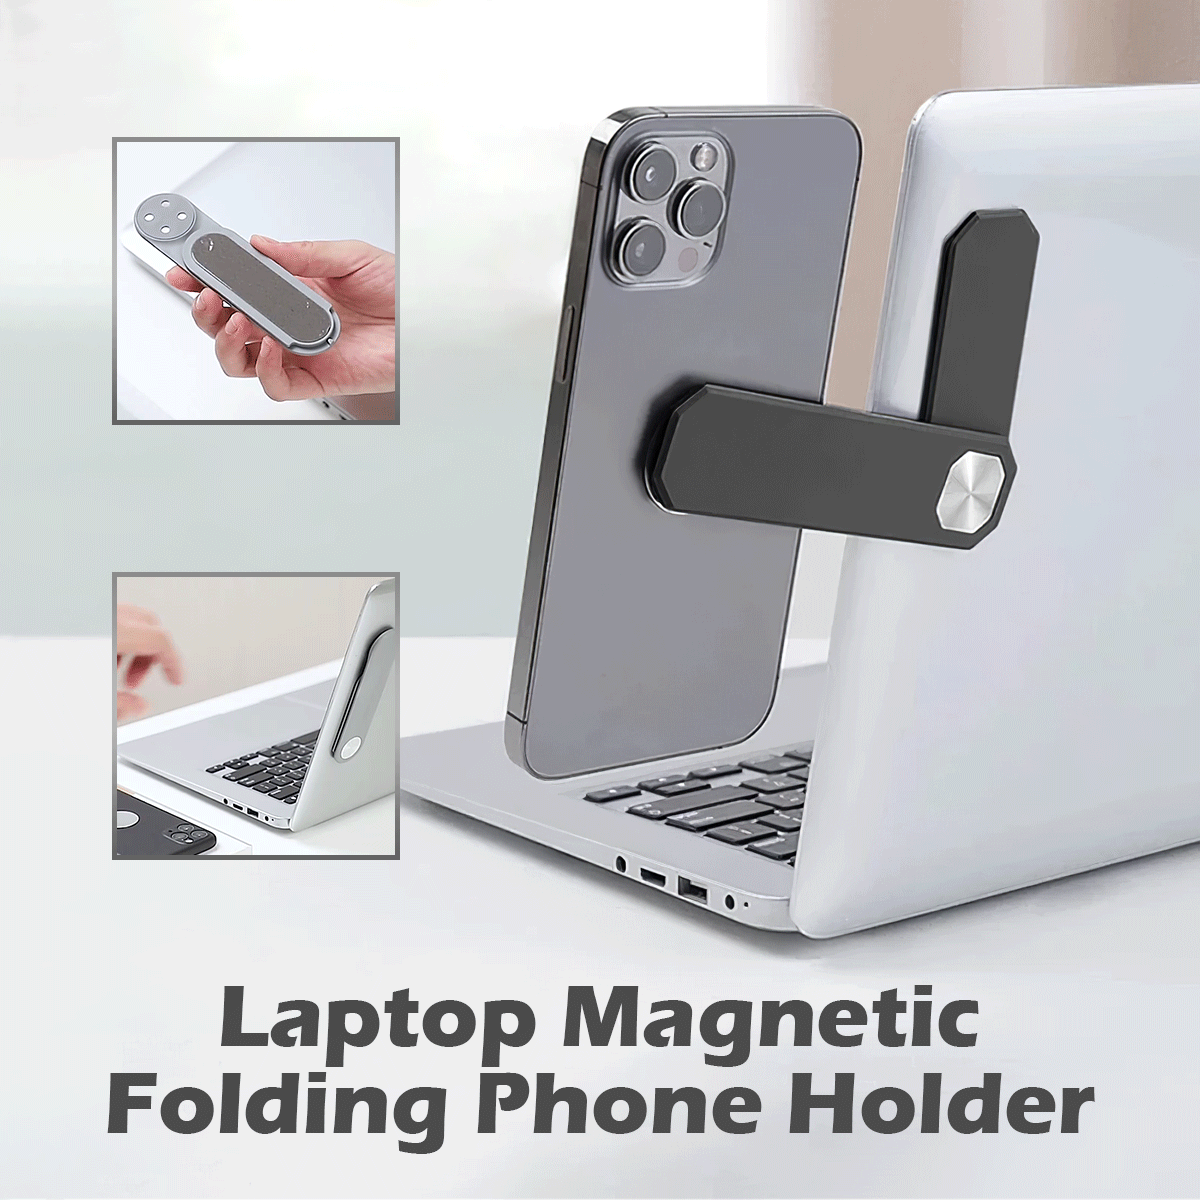 Laptop Magnetic Folding Phone Holder